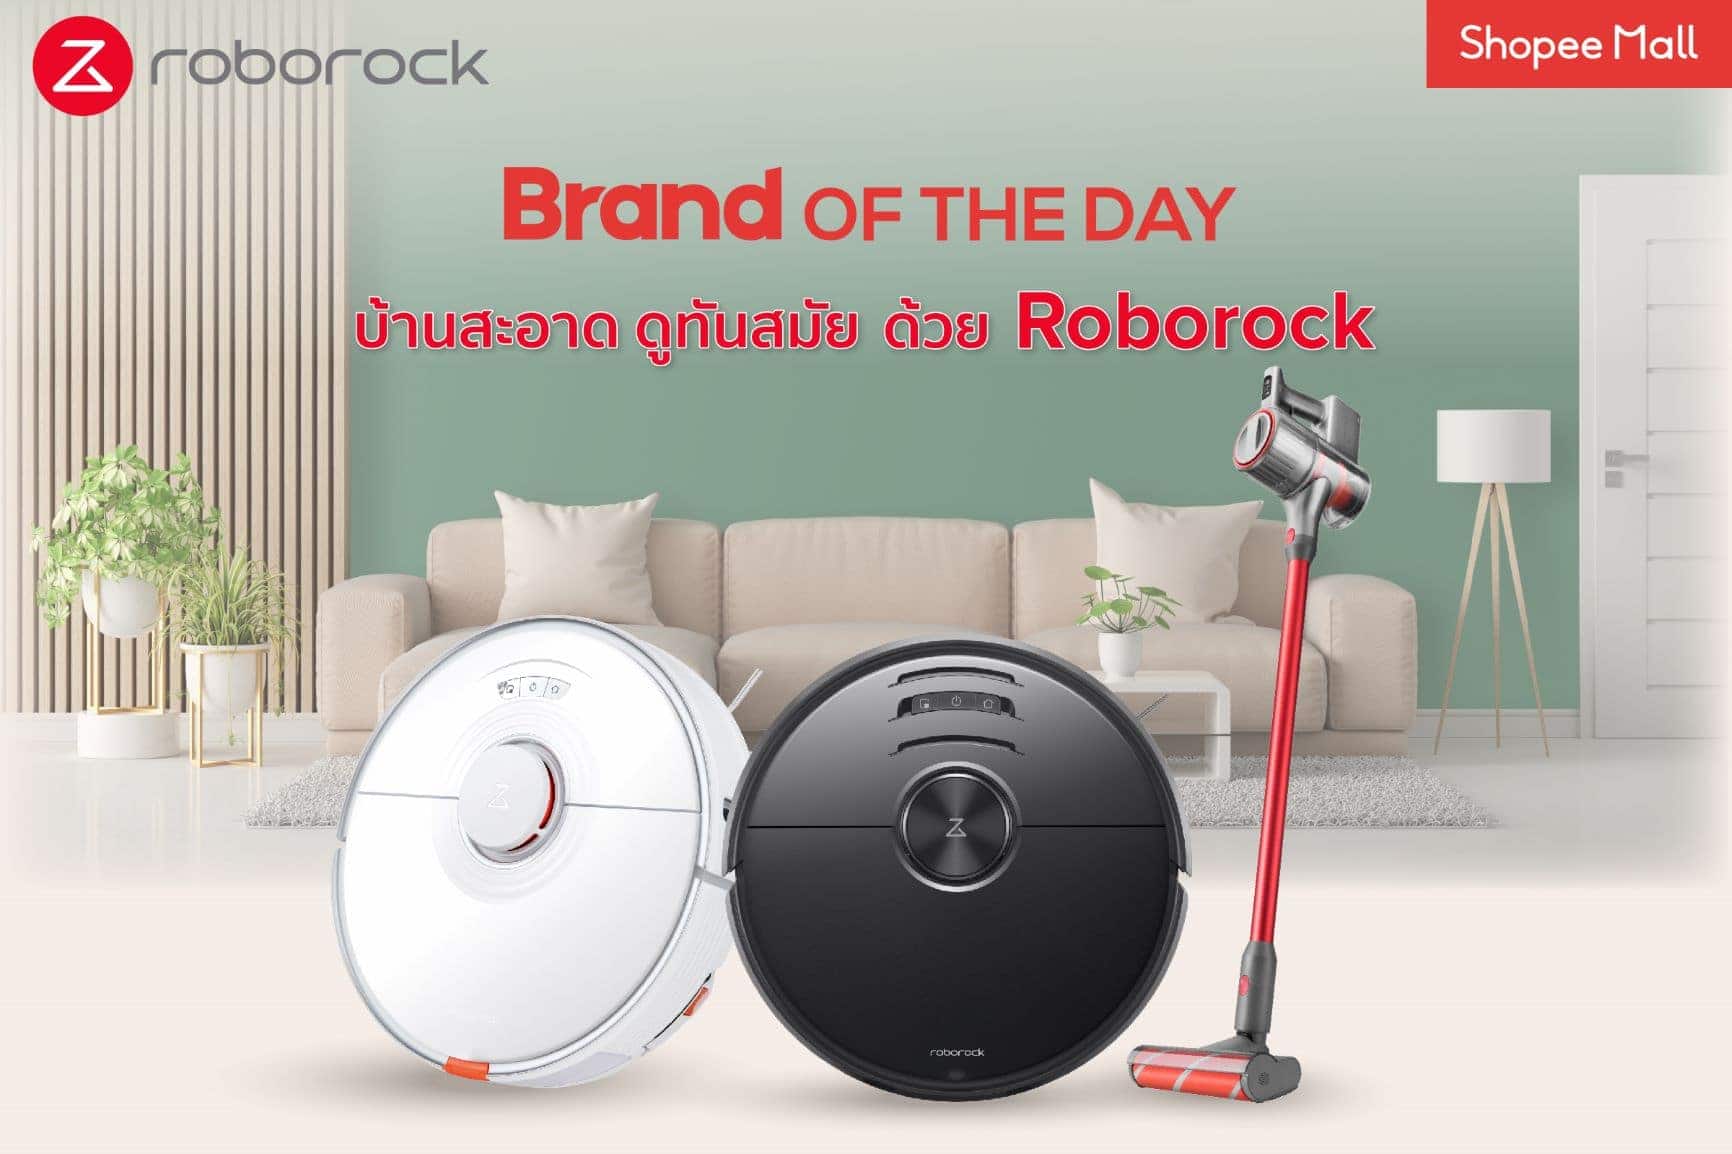 Roborock x Shopee มอบส่วนลดสูงสุด 3,000 บาท ในแคมเปญ Roborock Brand of the Day เปิดตัวสินค้าใหม่ Roborock H7 เครื่องดูดฝุ่น ไร้สาย ทรงพลังที่สุดแห่งปี 1